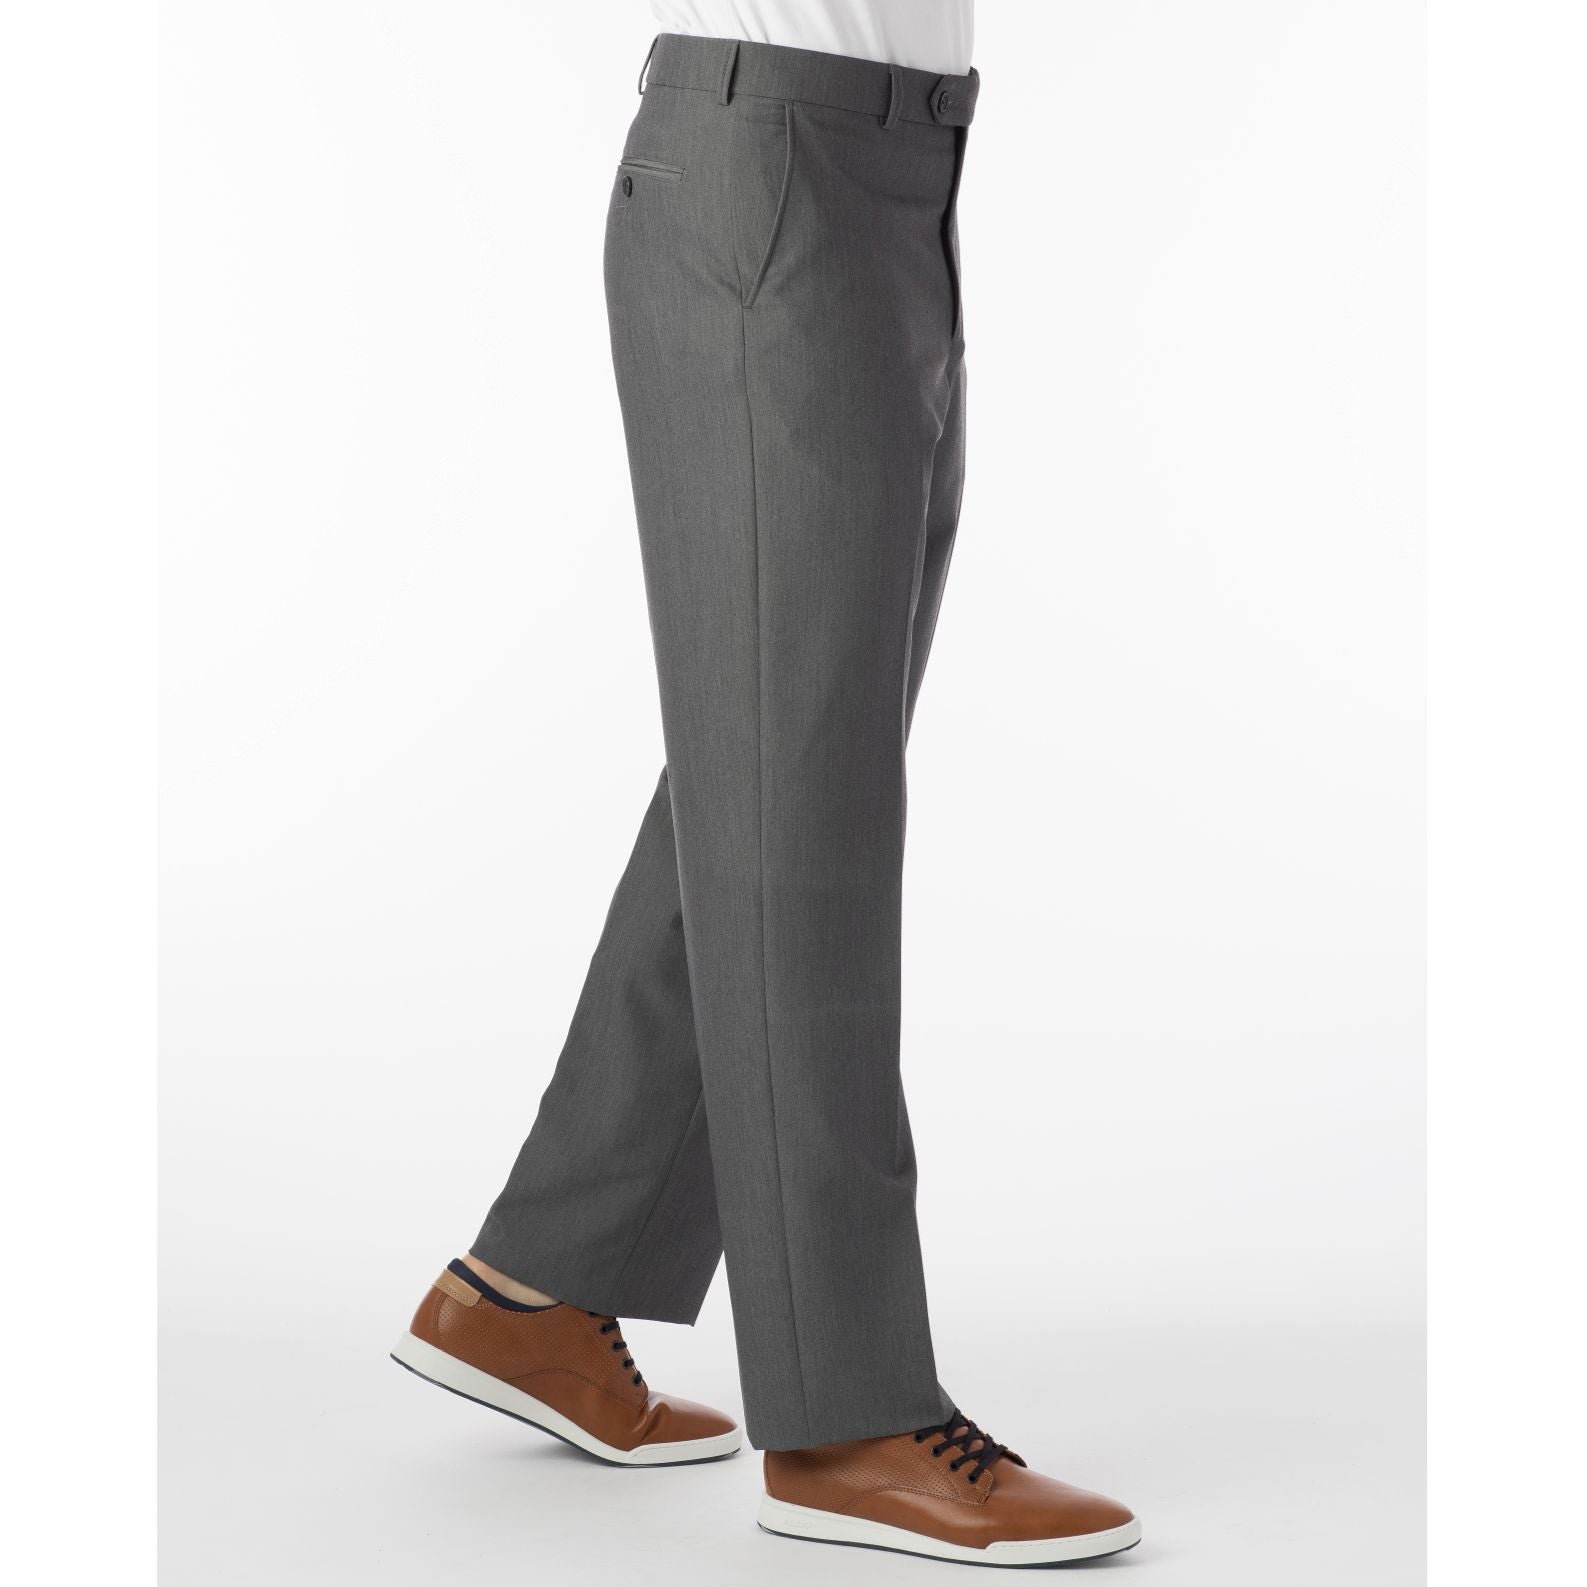 Comfort-EZE Commuter Bi-Stretch Gabardine Trouser in Medium Grey (Flat Front Models) by Ballin